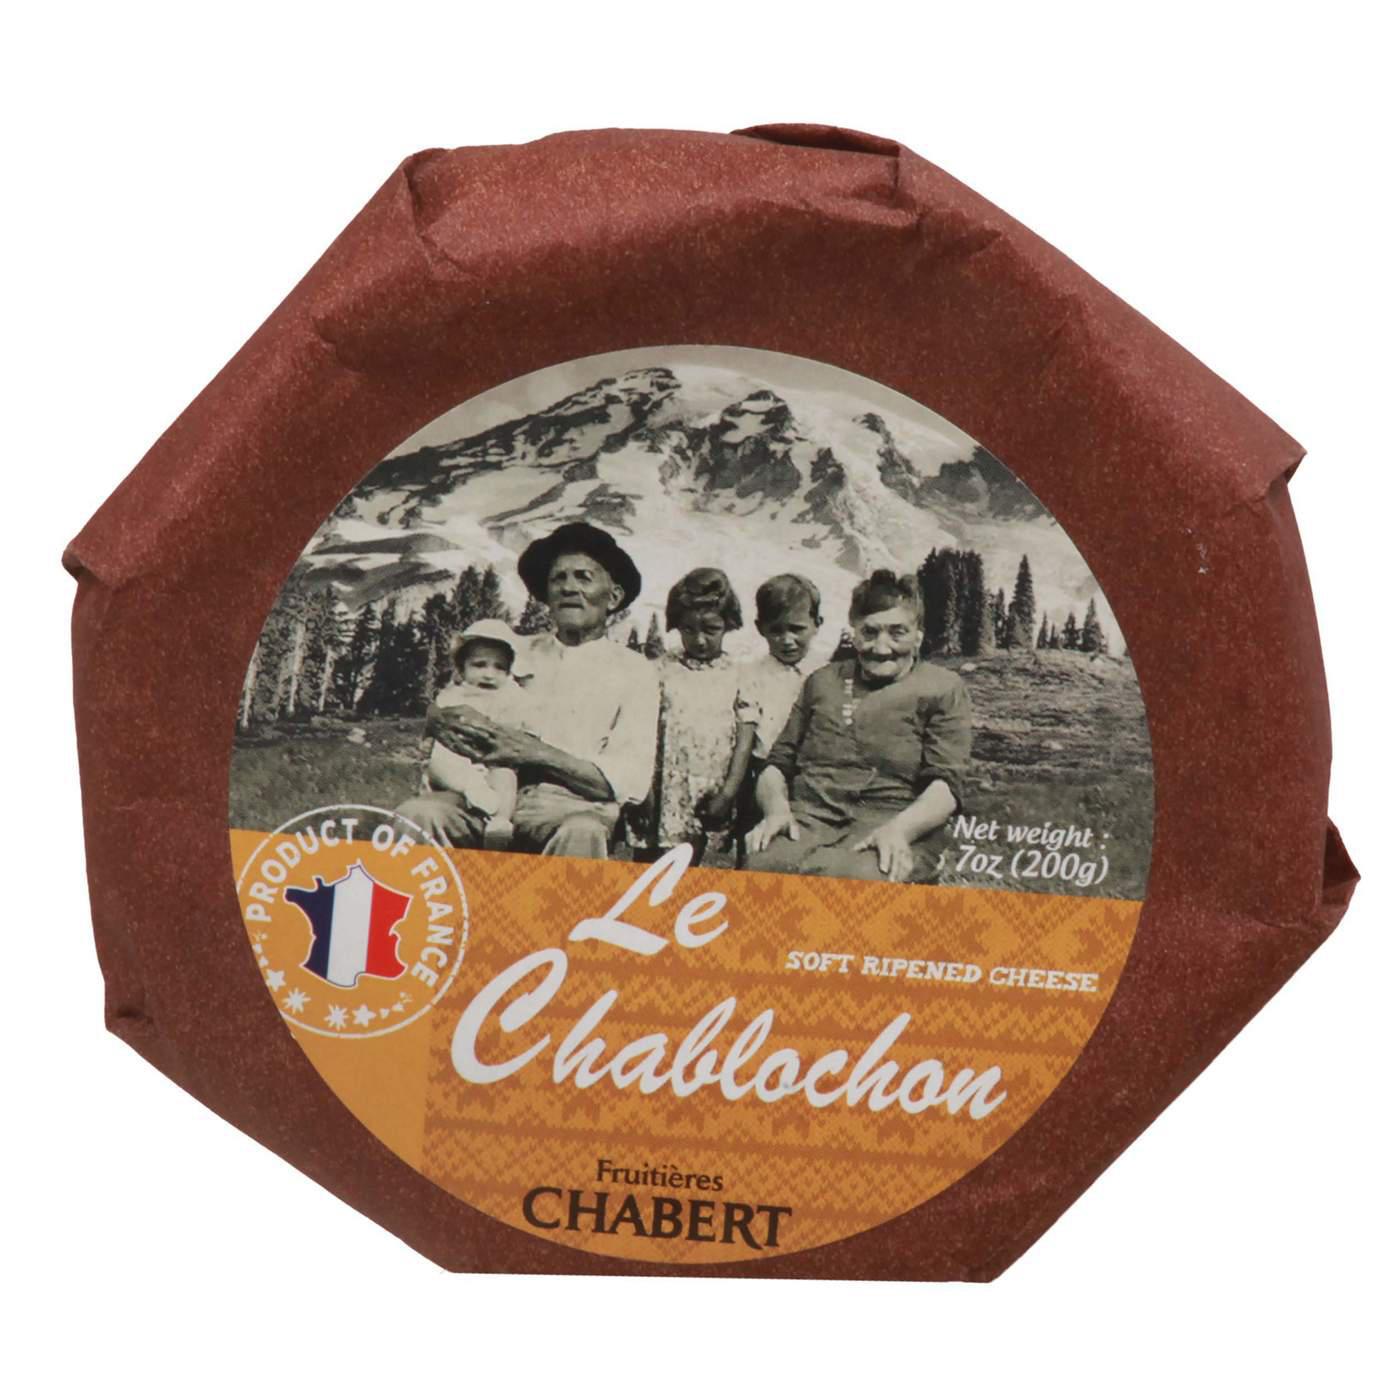 Chabert Soft Ripened Cheese 7oz - Le Chablochon